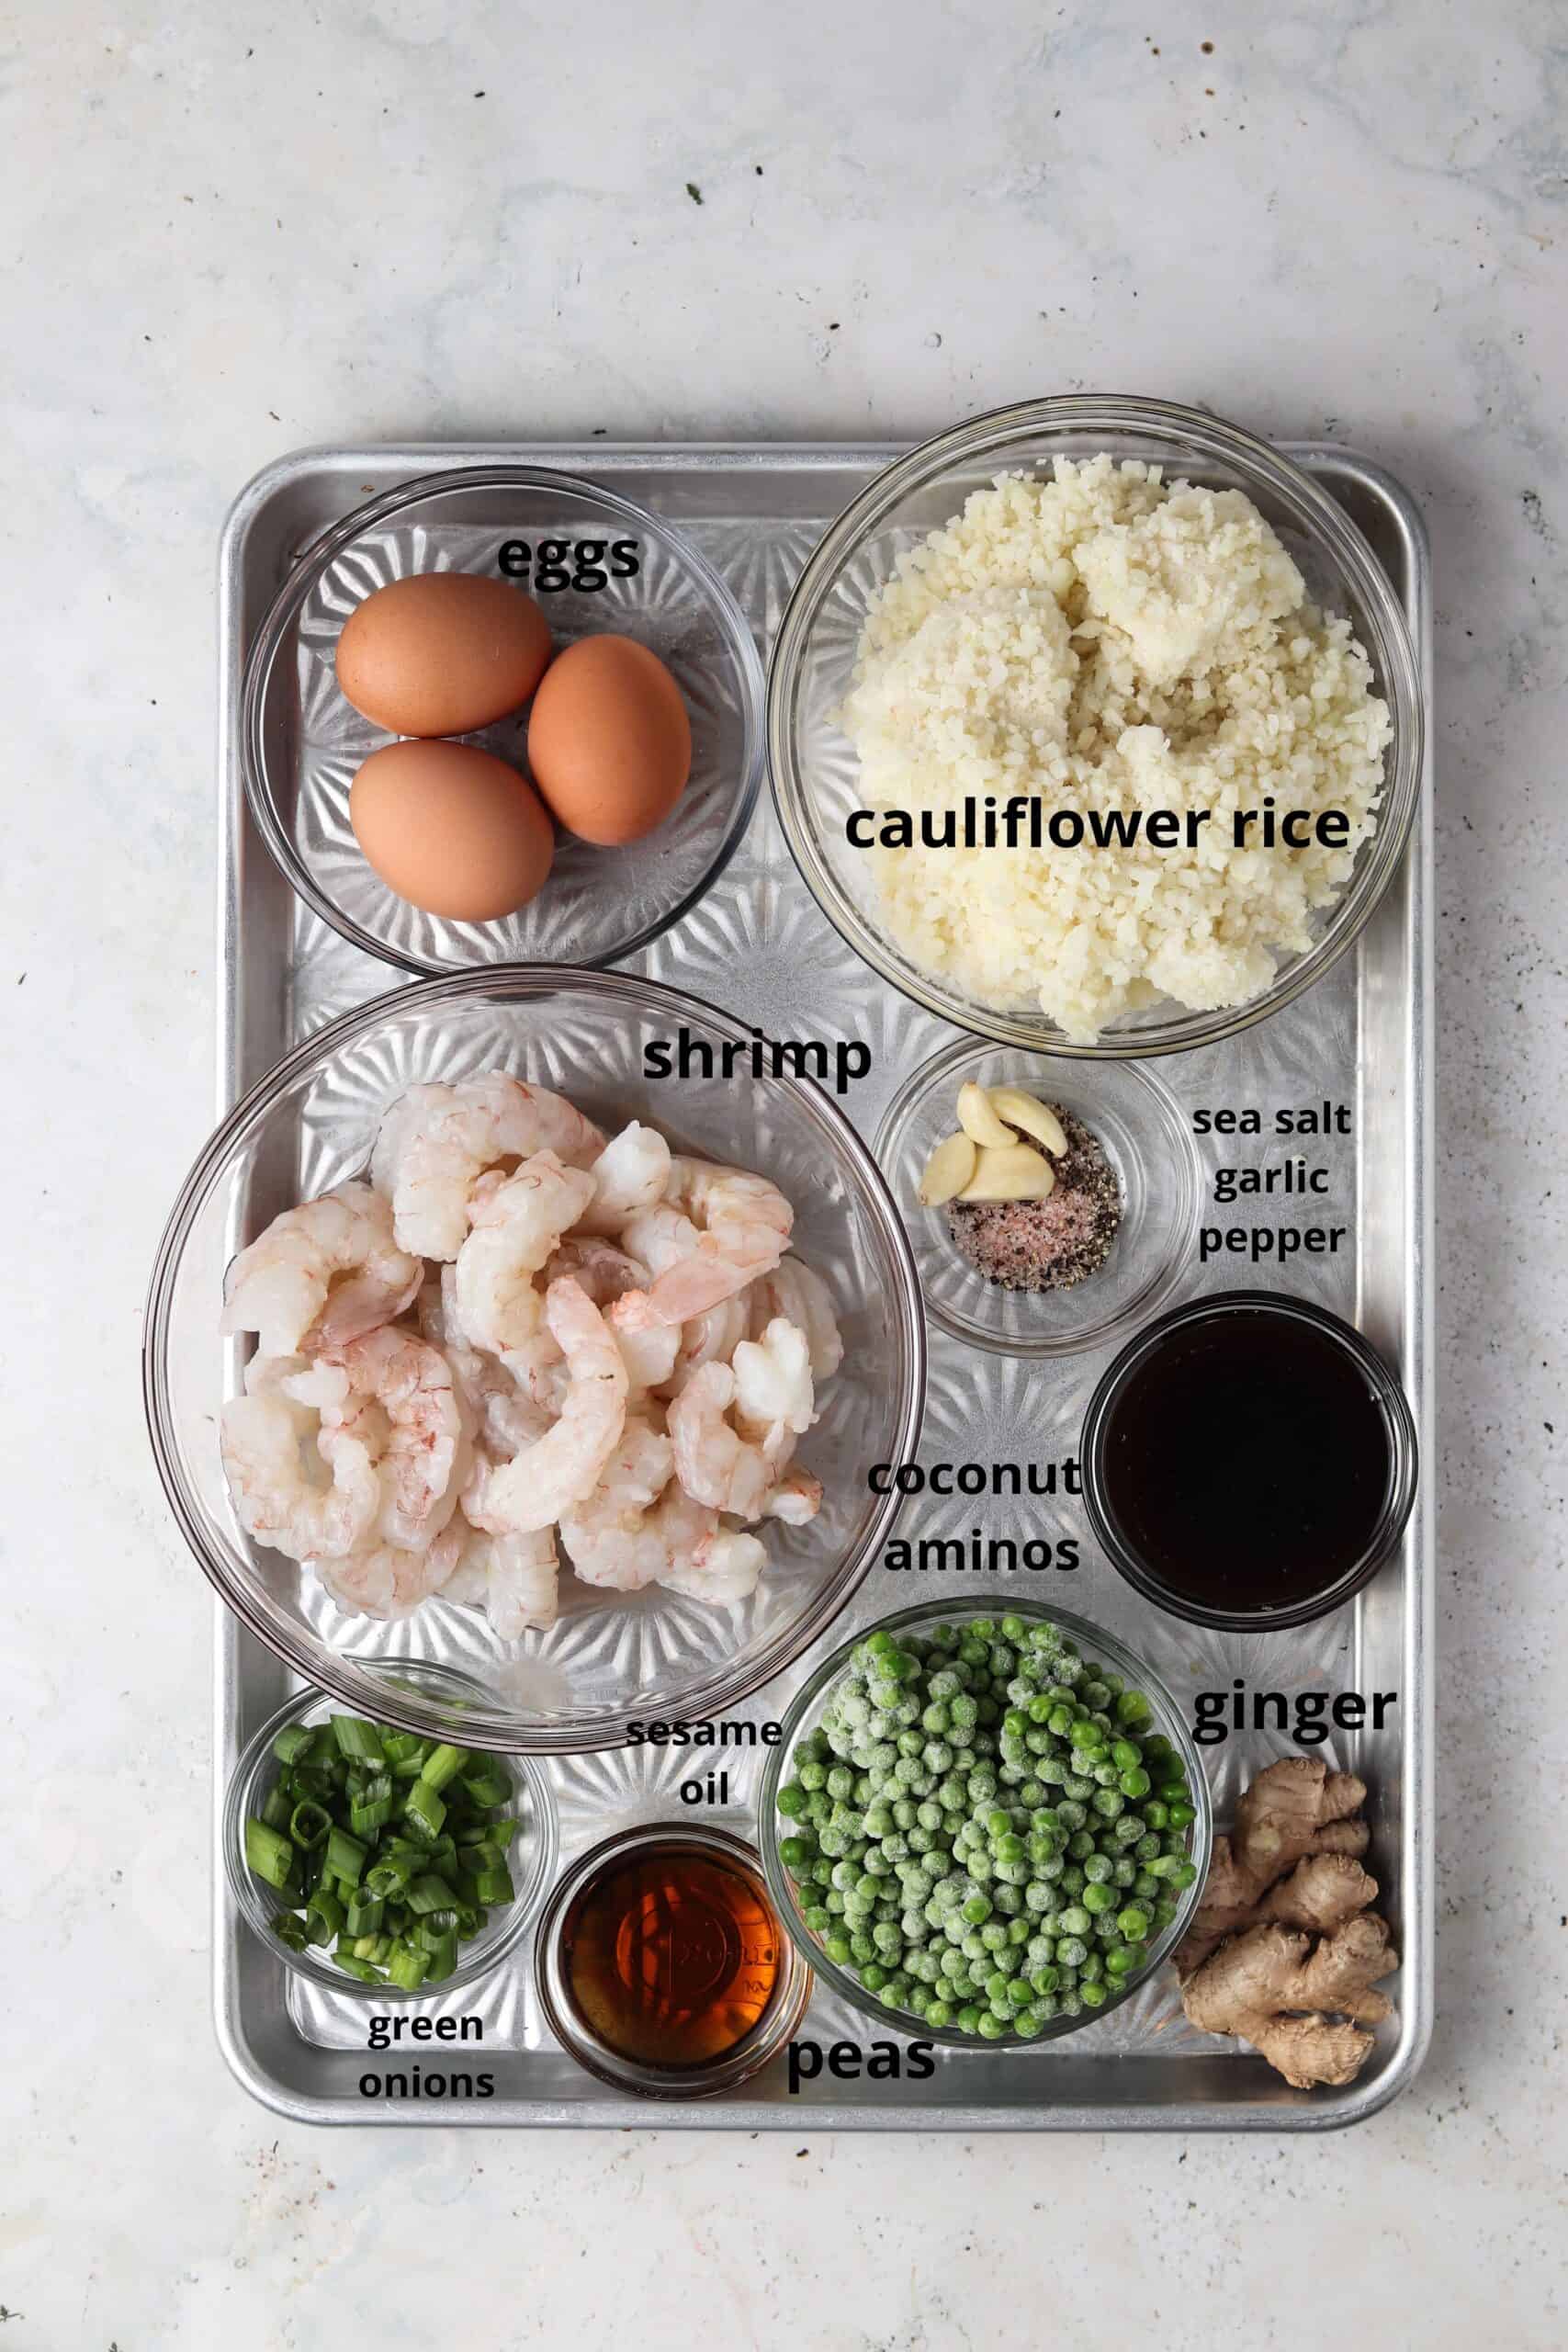 Shrimp fried cauliflower rice ingredients on a metal tray.